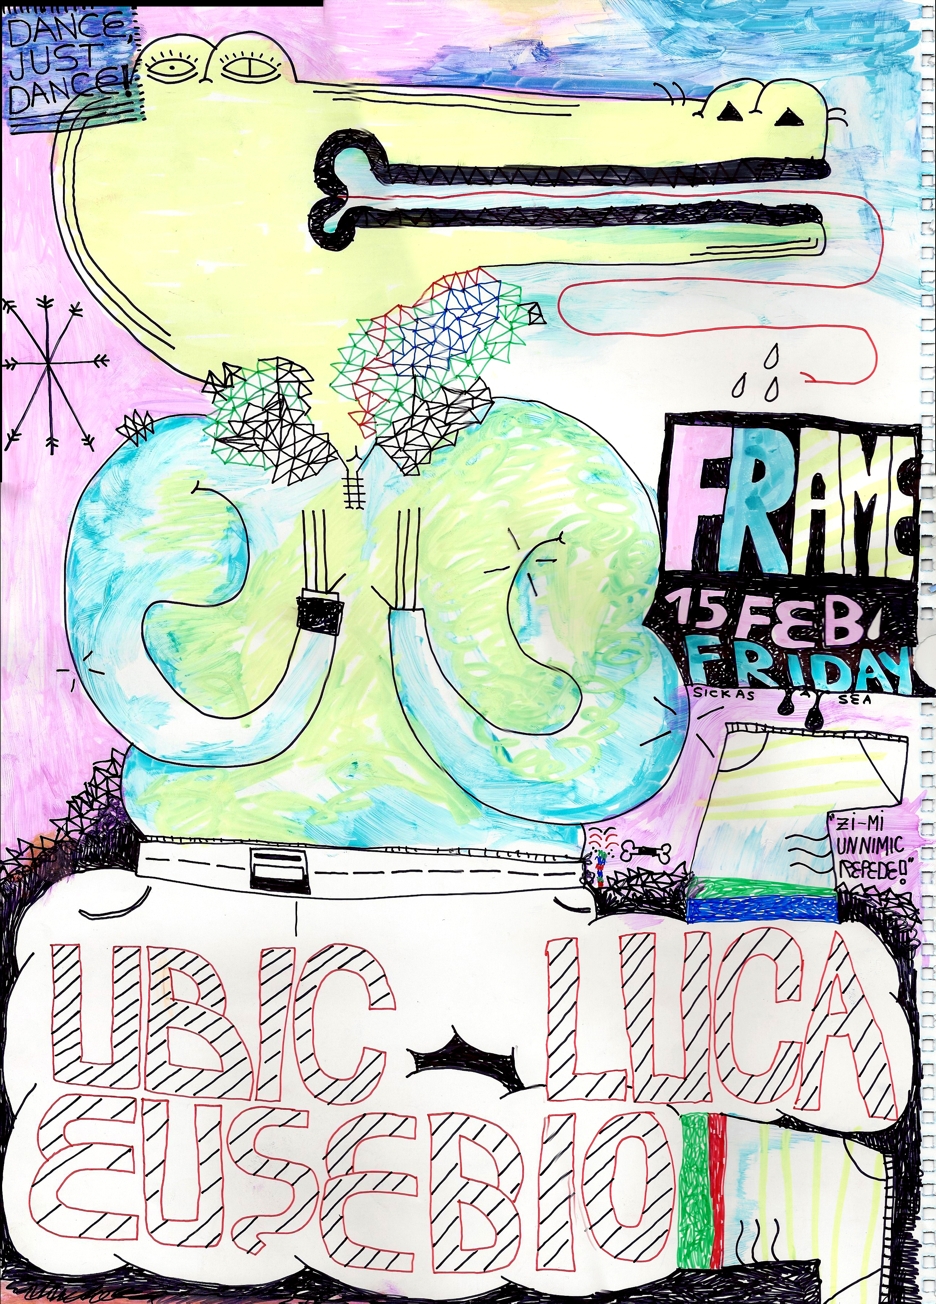 [Ubic,Luca,Eusebio+Digital+@+Frame,+Friday+15-02+72dpi.jpg]